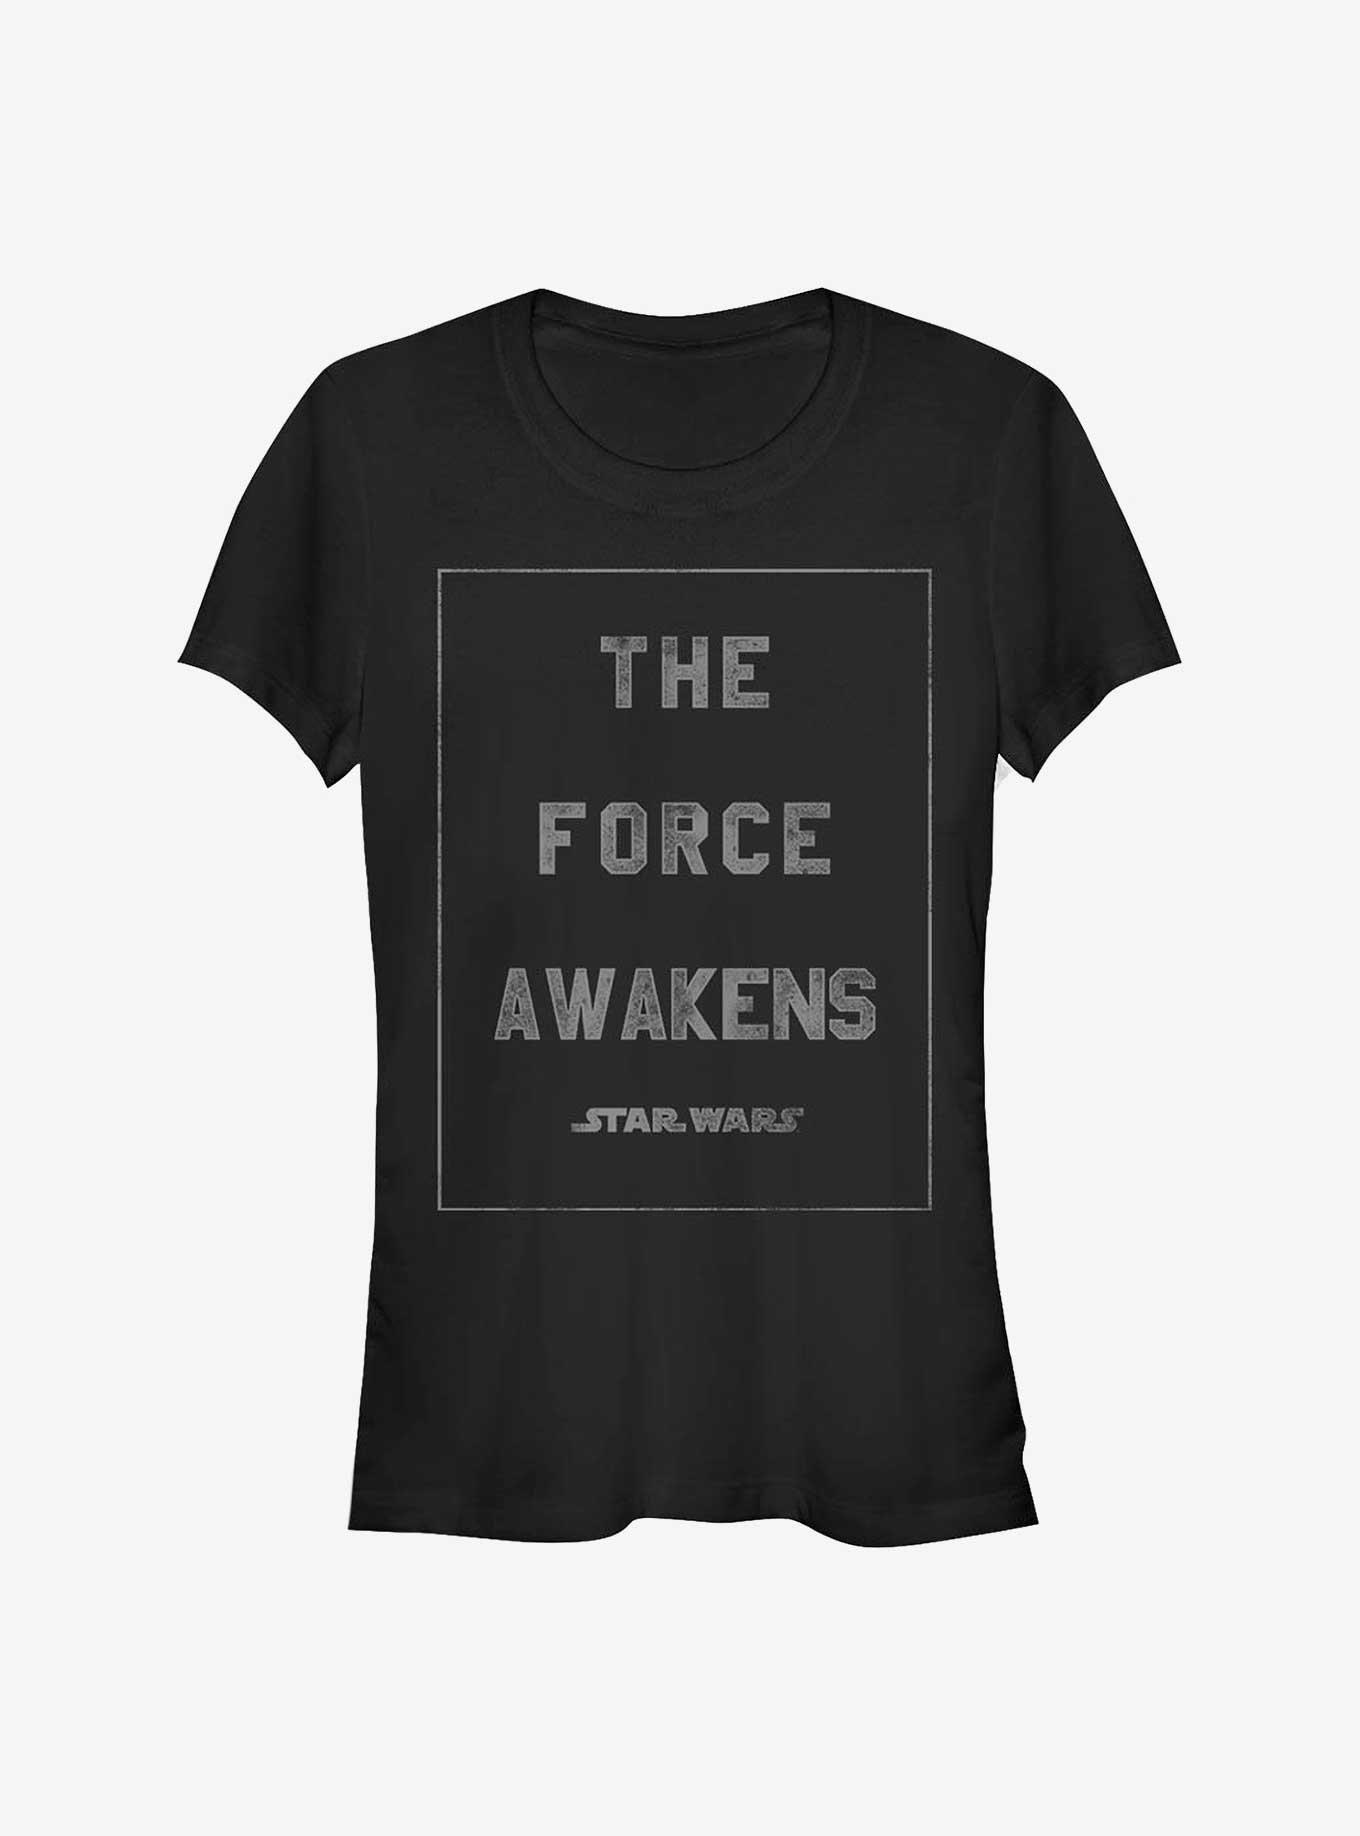 Star Wars Heroine Awaken Girls T-Shirt